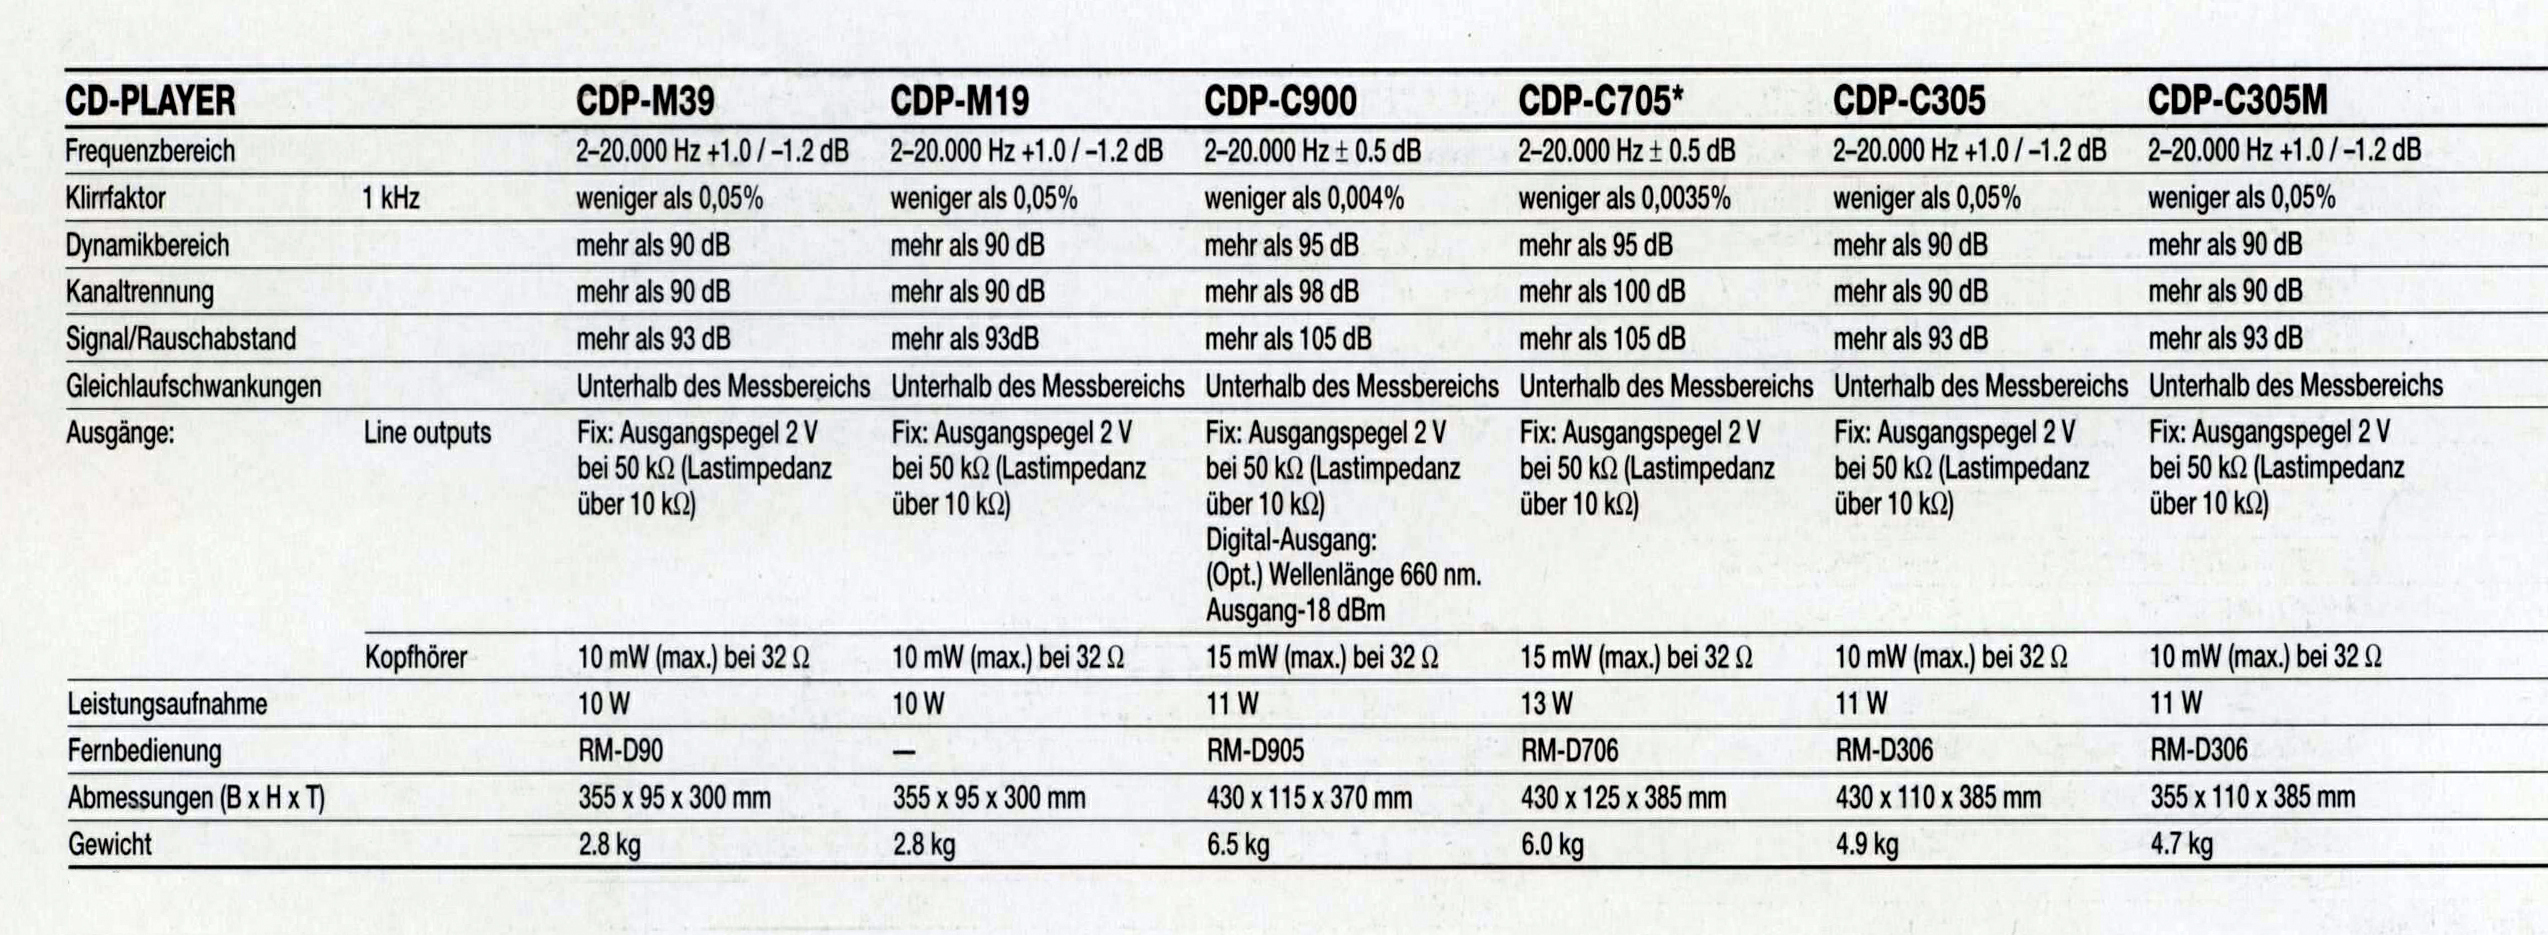 Sony CDP-C 900-705-305 M-19-39-Daten 1991.jpg